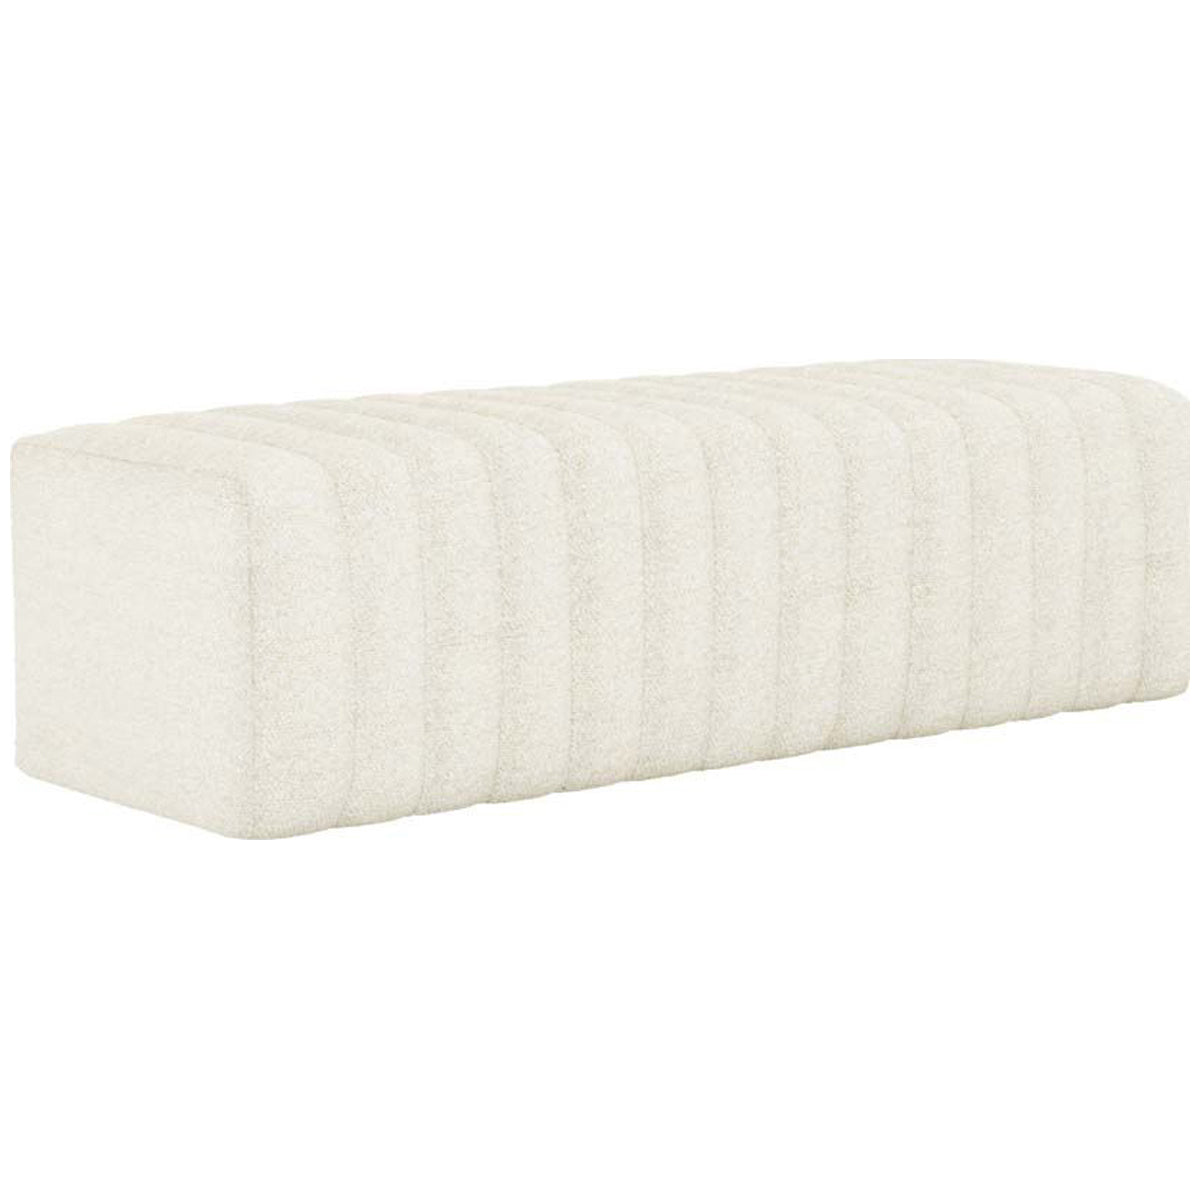 Interlude Home Cleo Bench - Foam